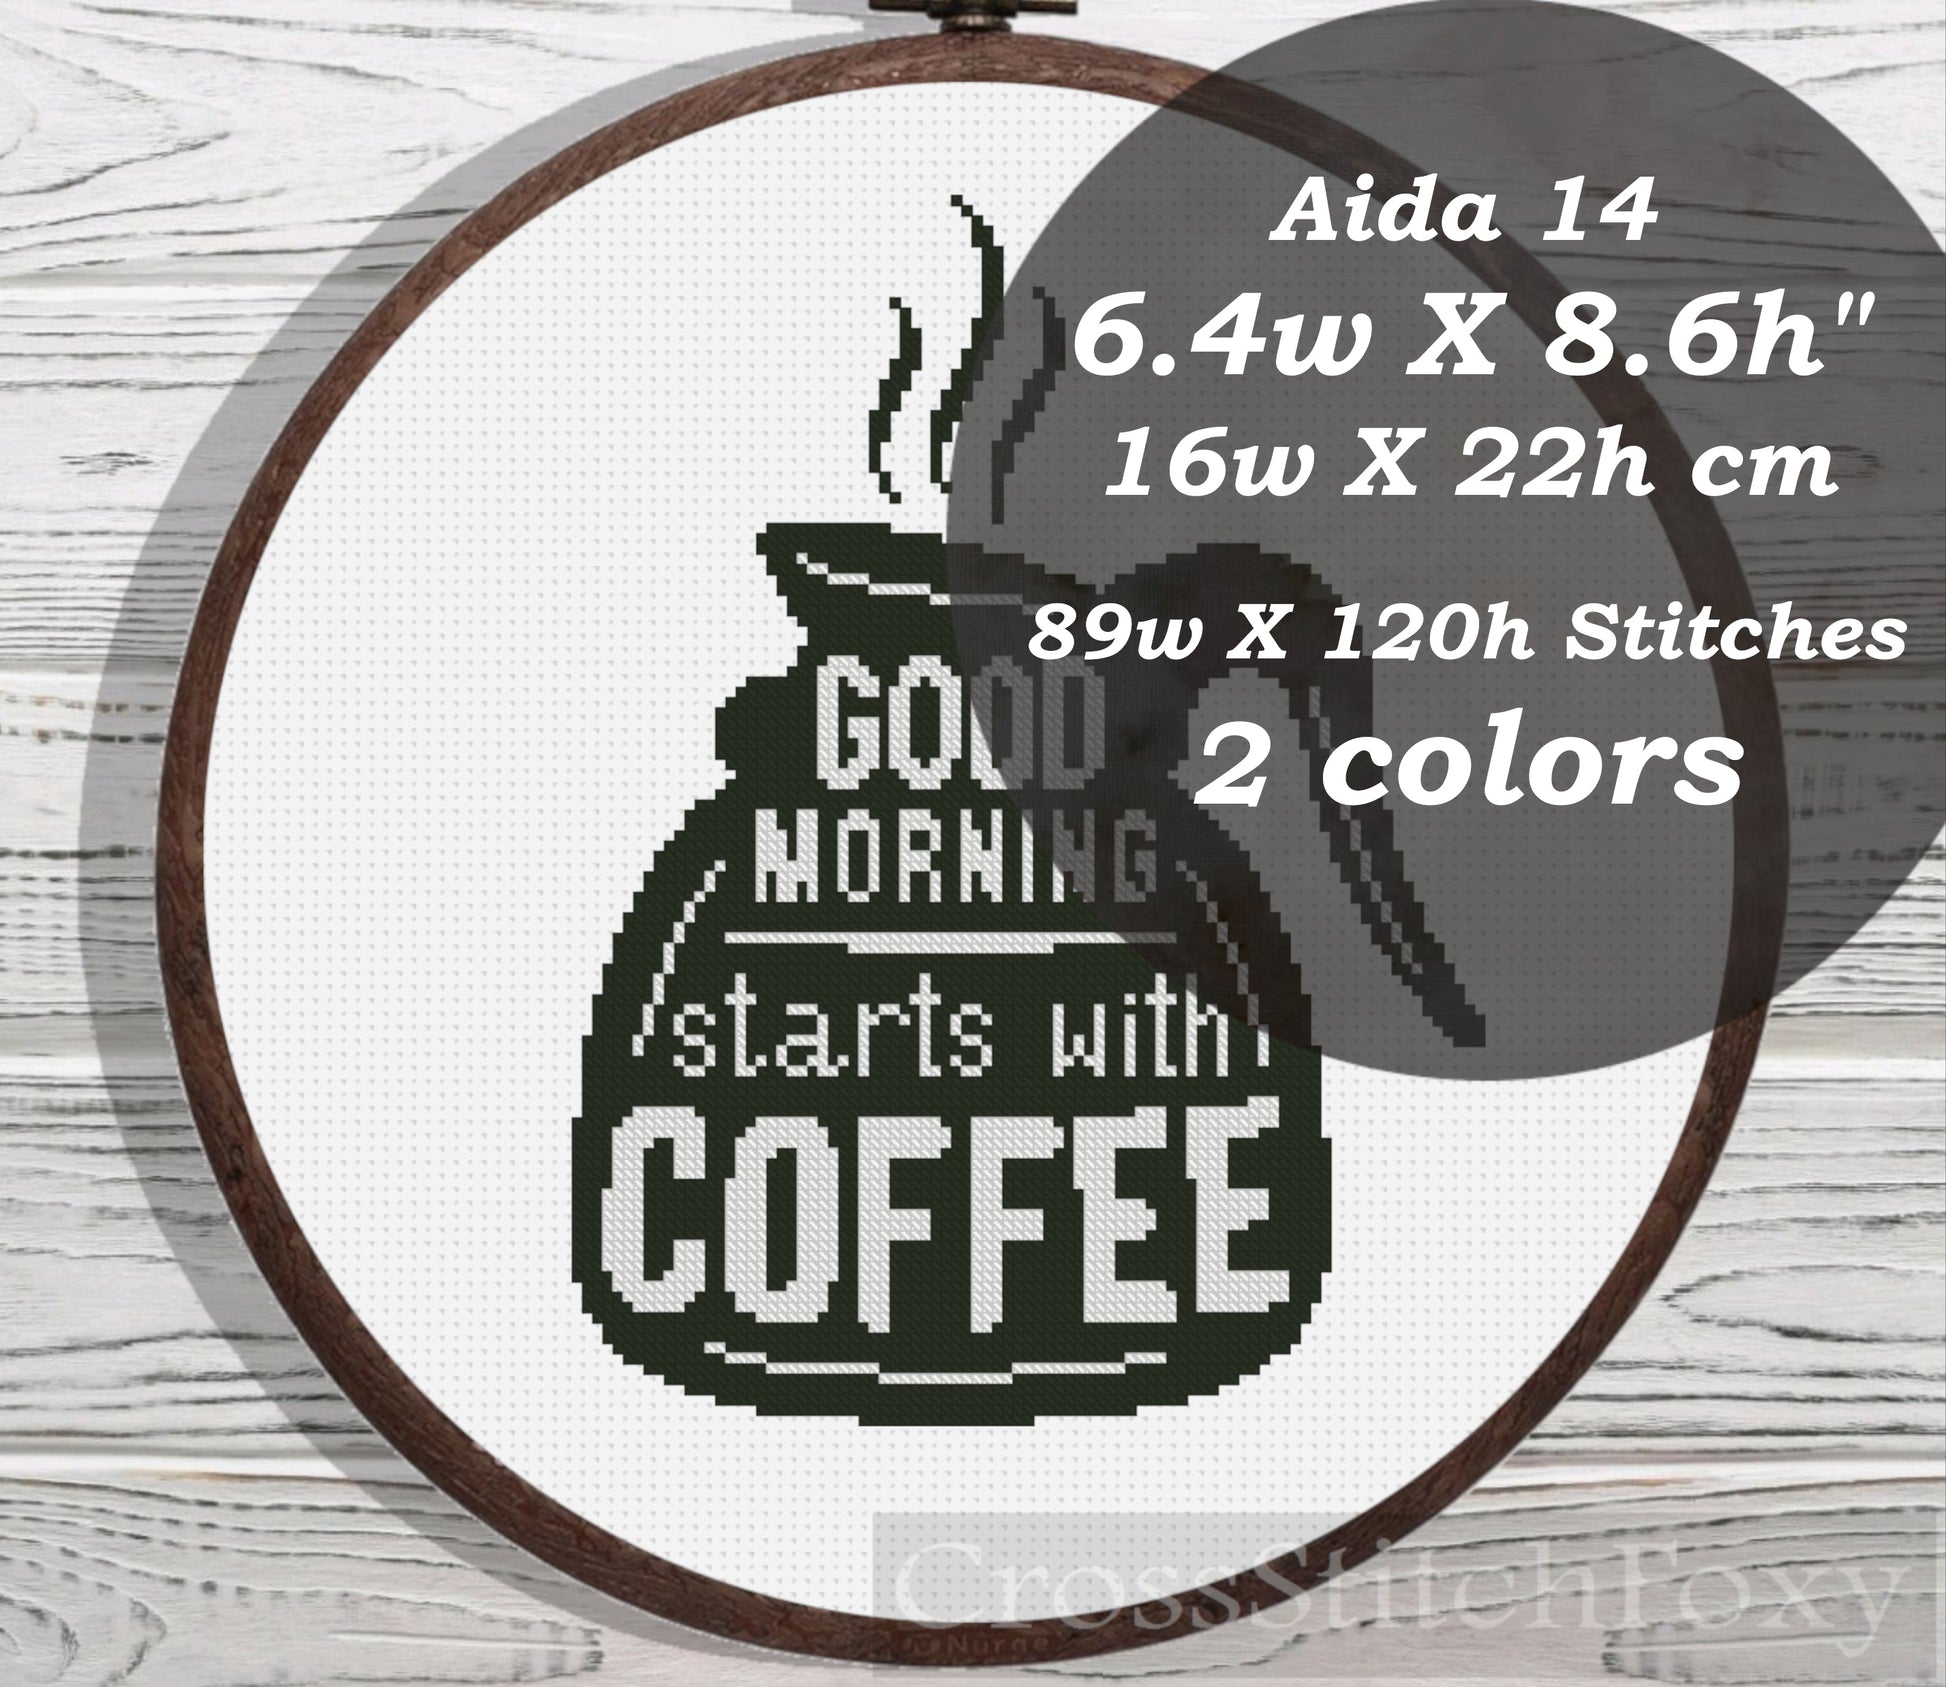 Good Morning Starts With Coffee cross stitch pattern